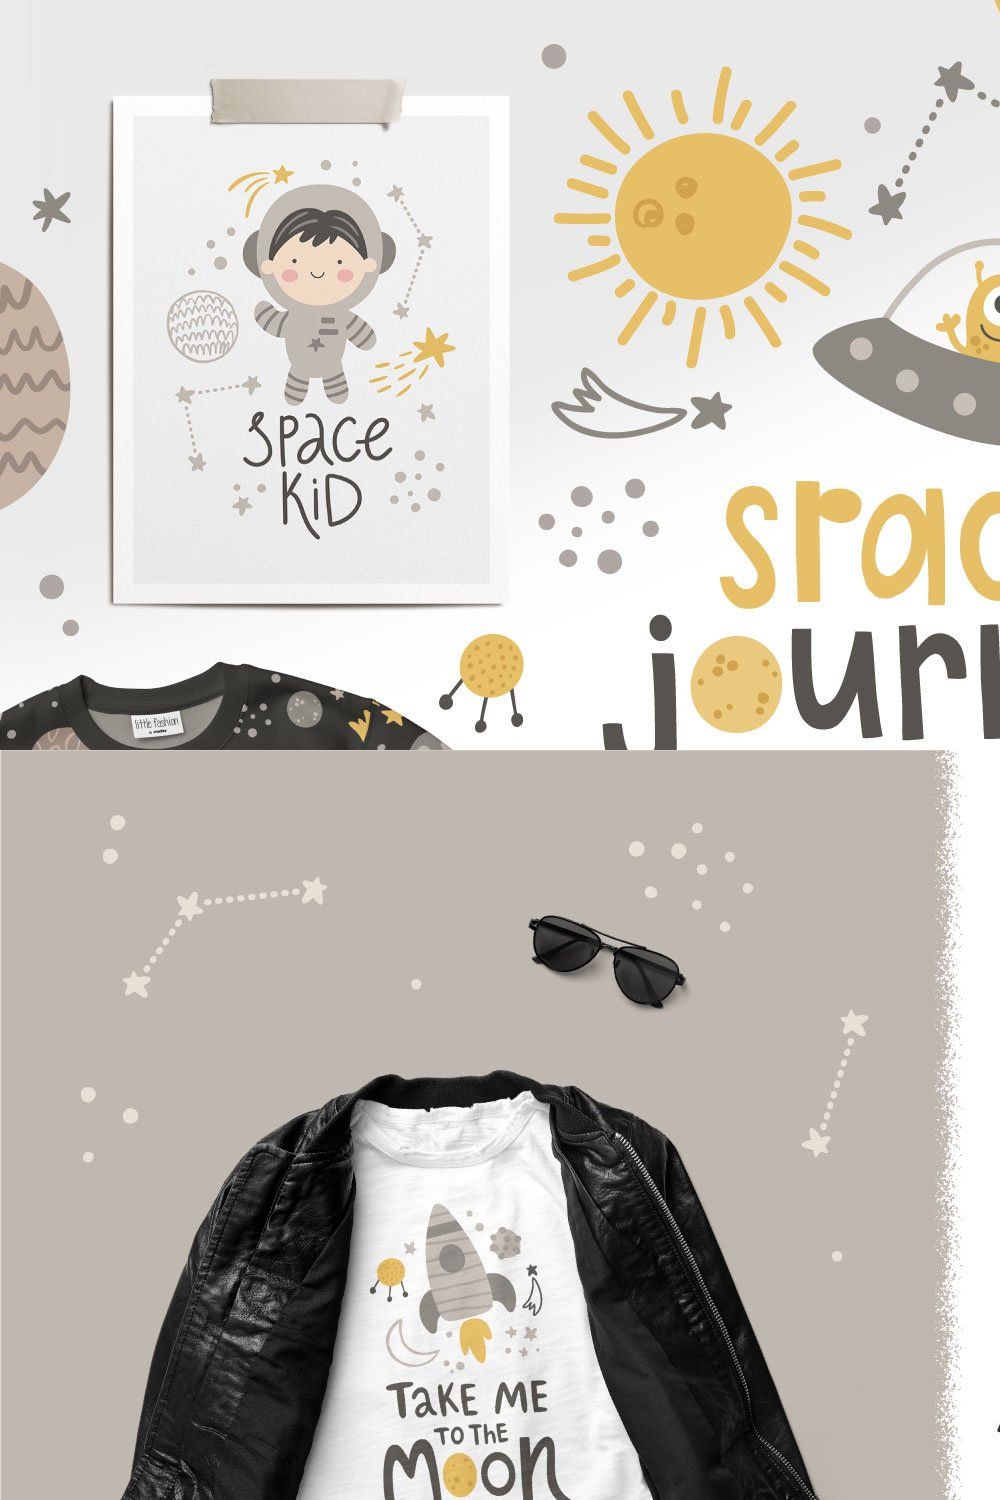 Space Journey Kids clipart set pinterest preview image.